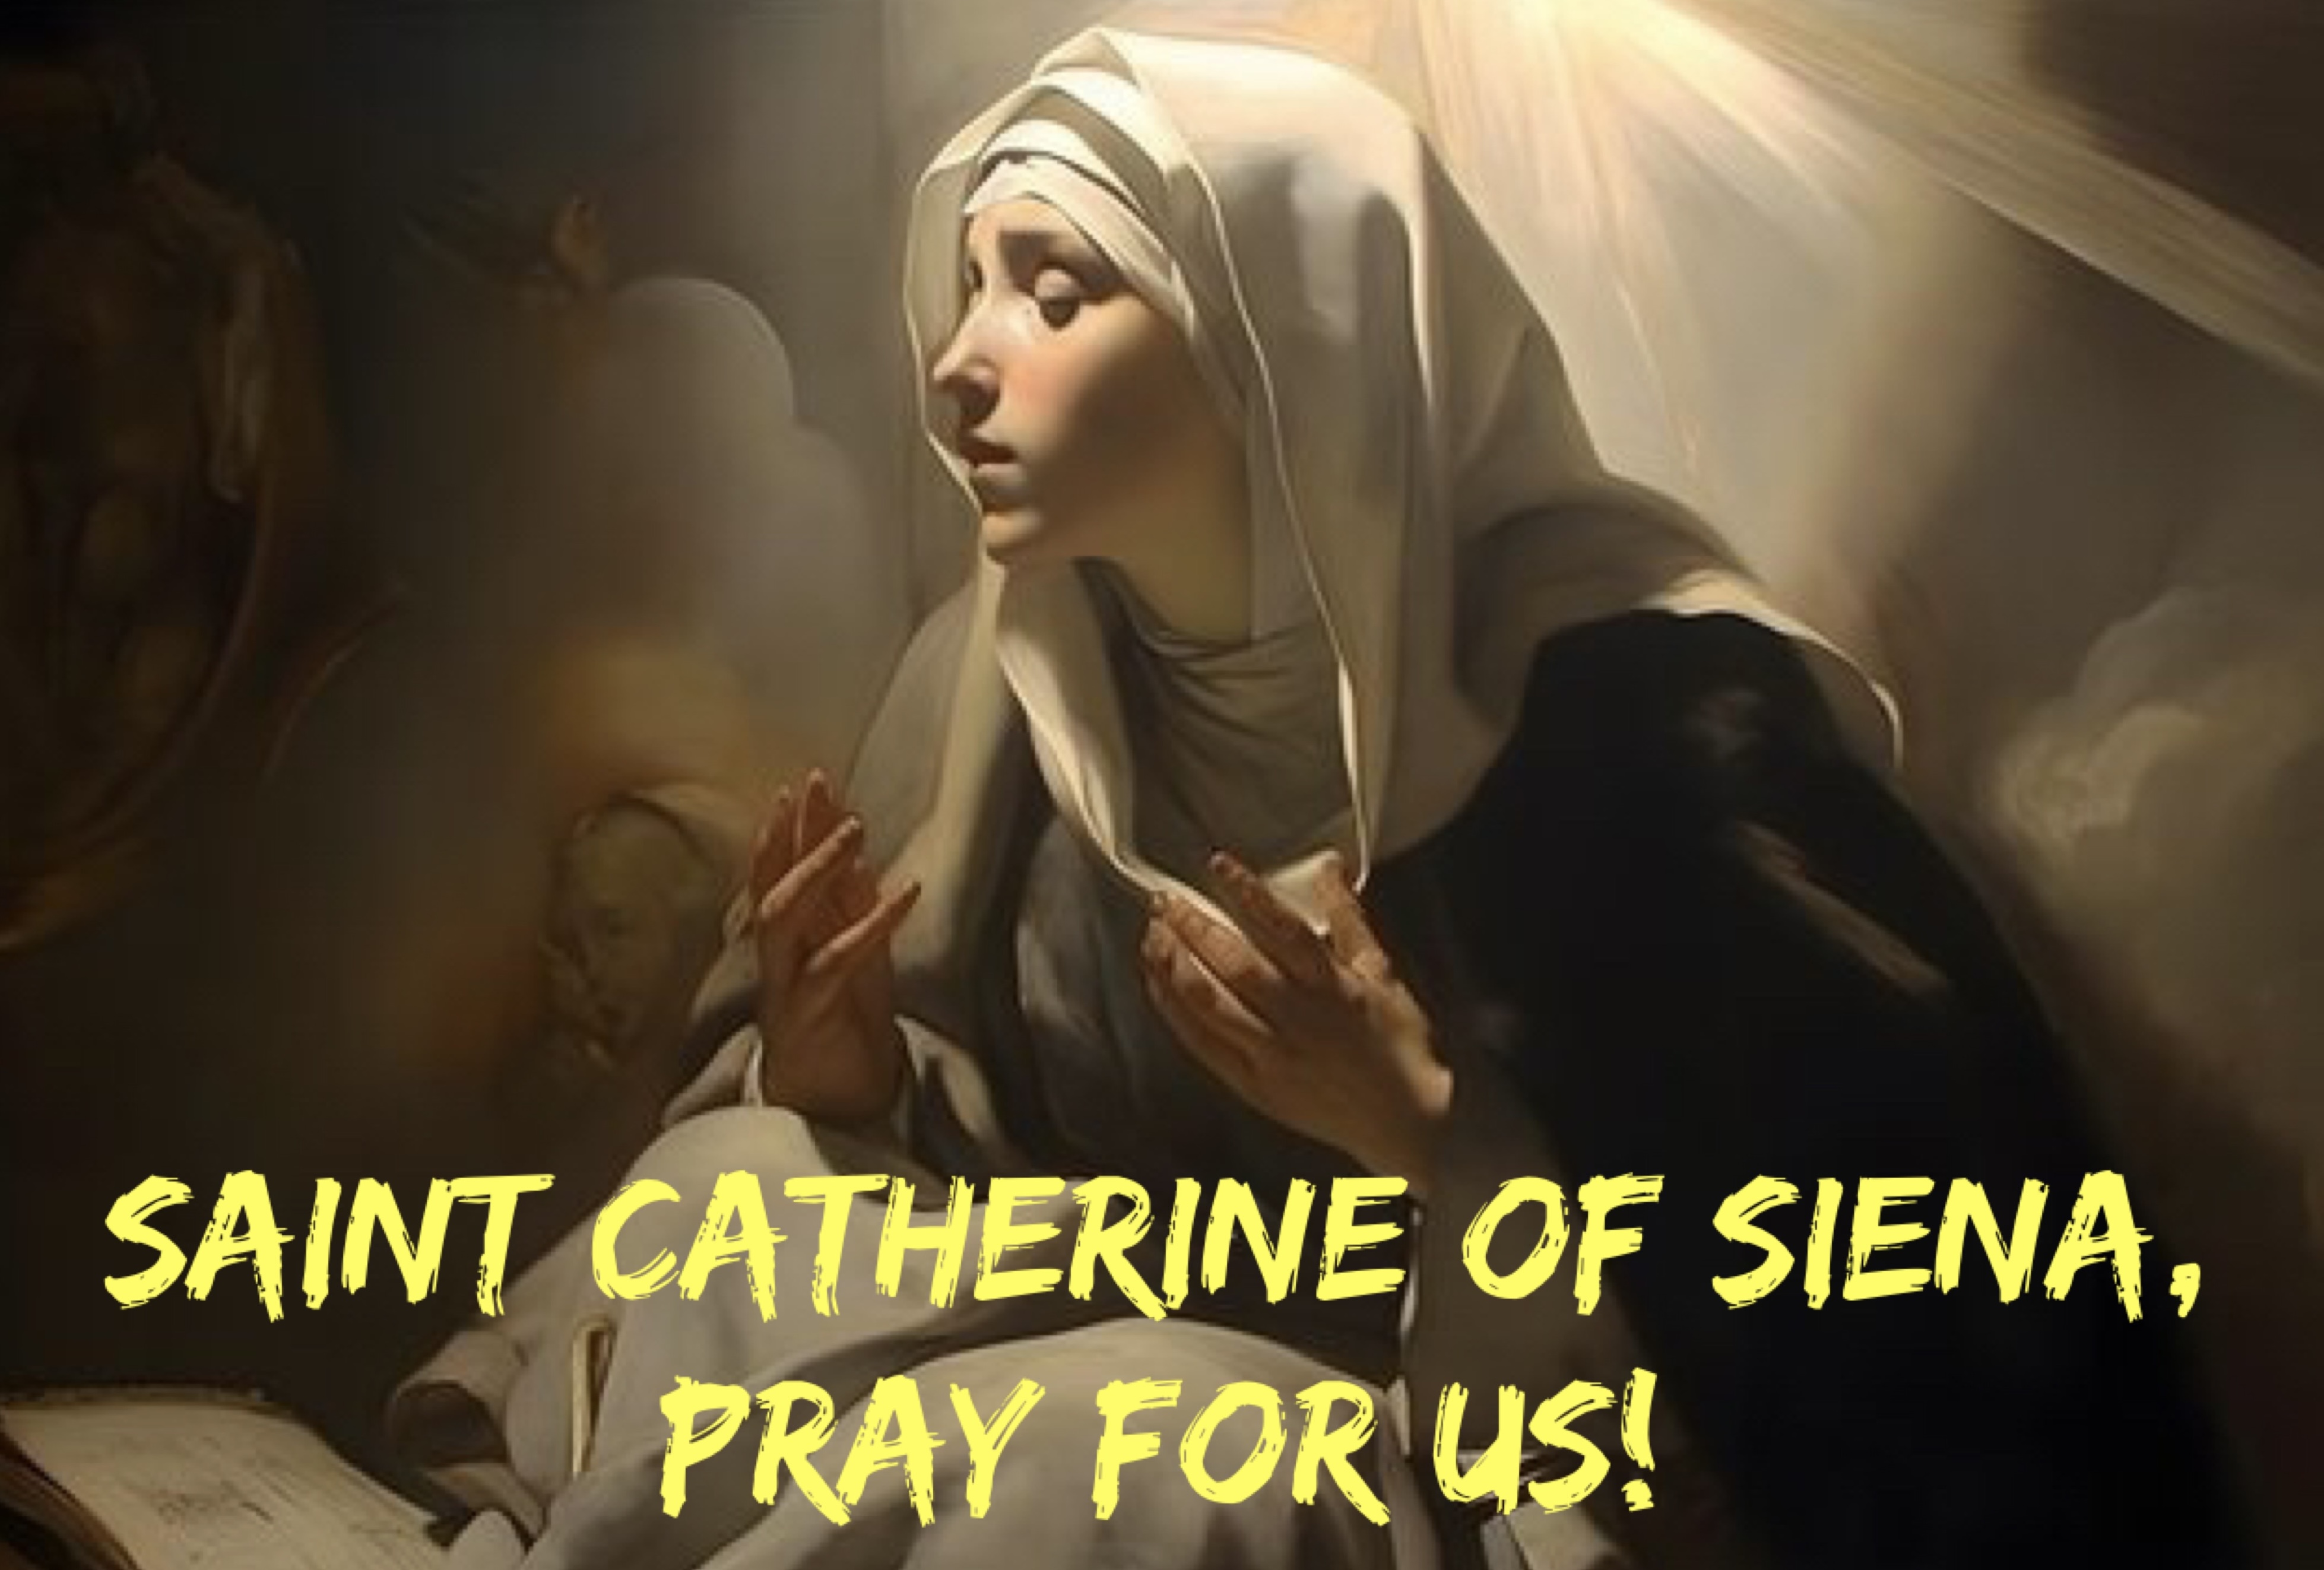 29th April - Saint Catherine of Siena